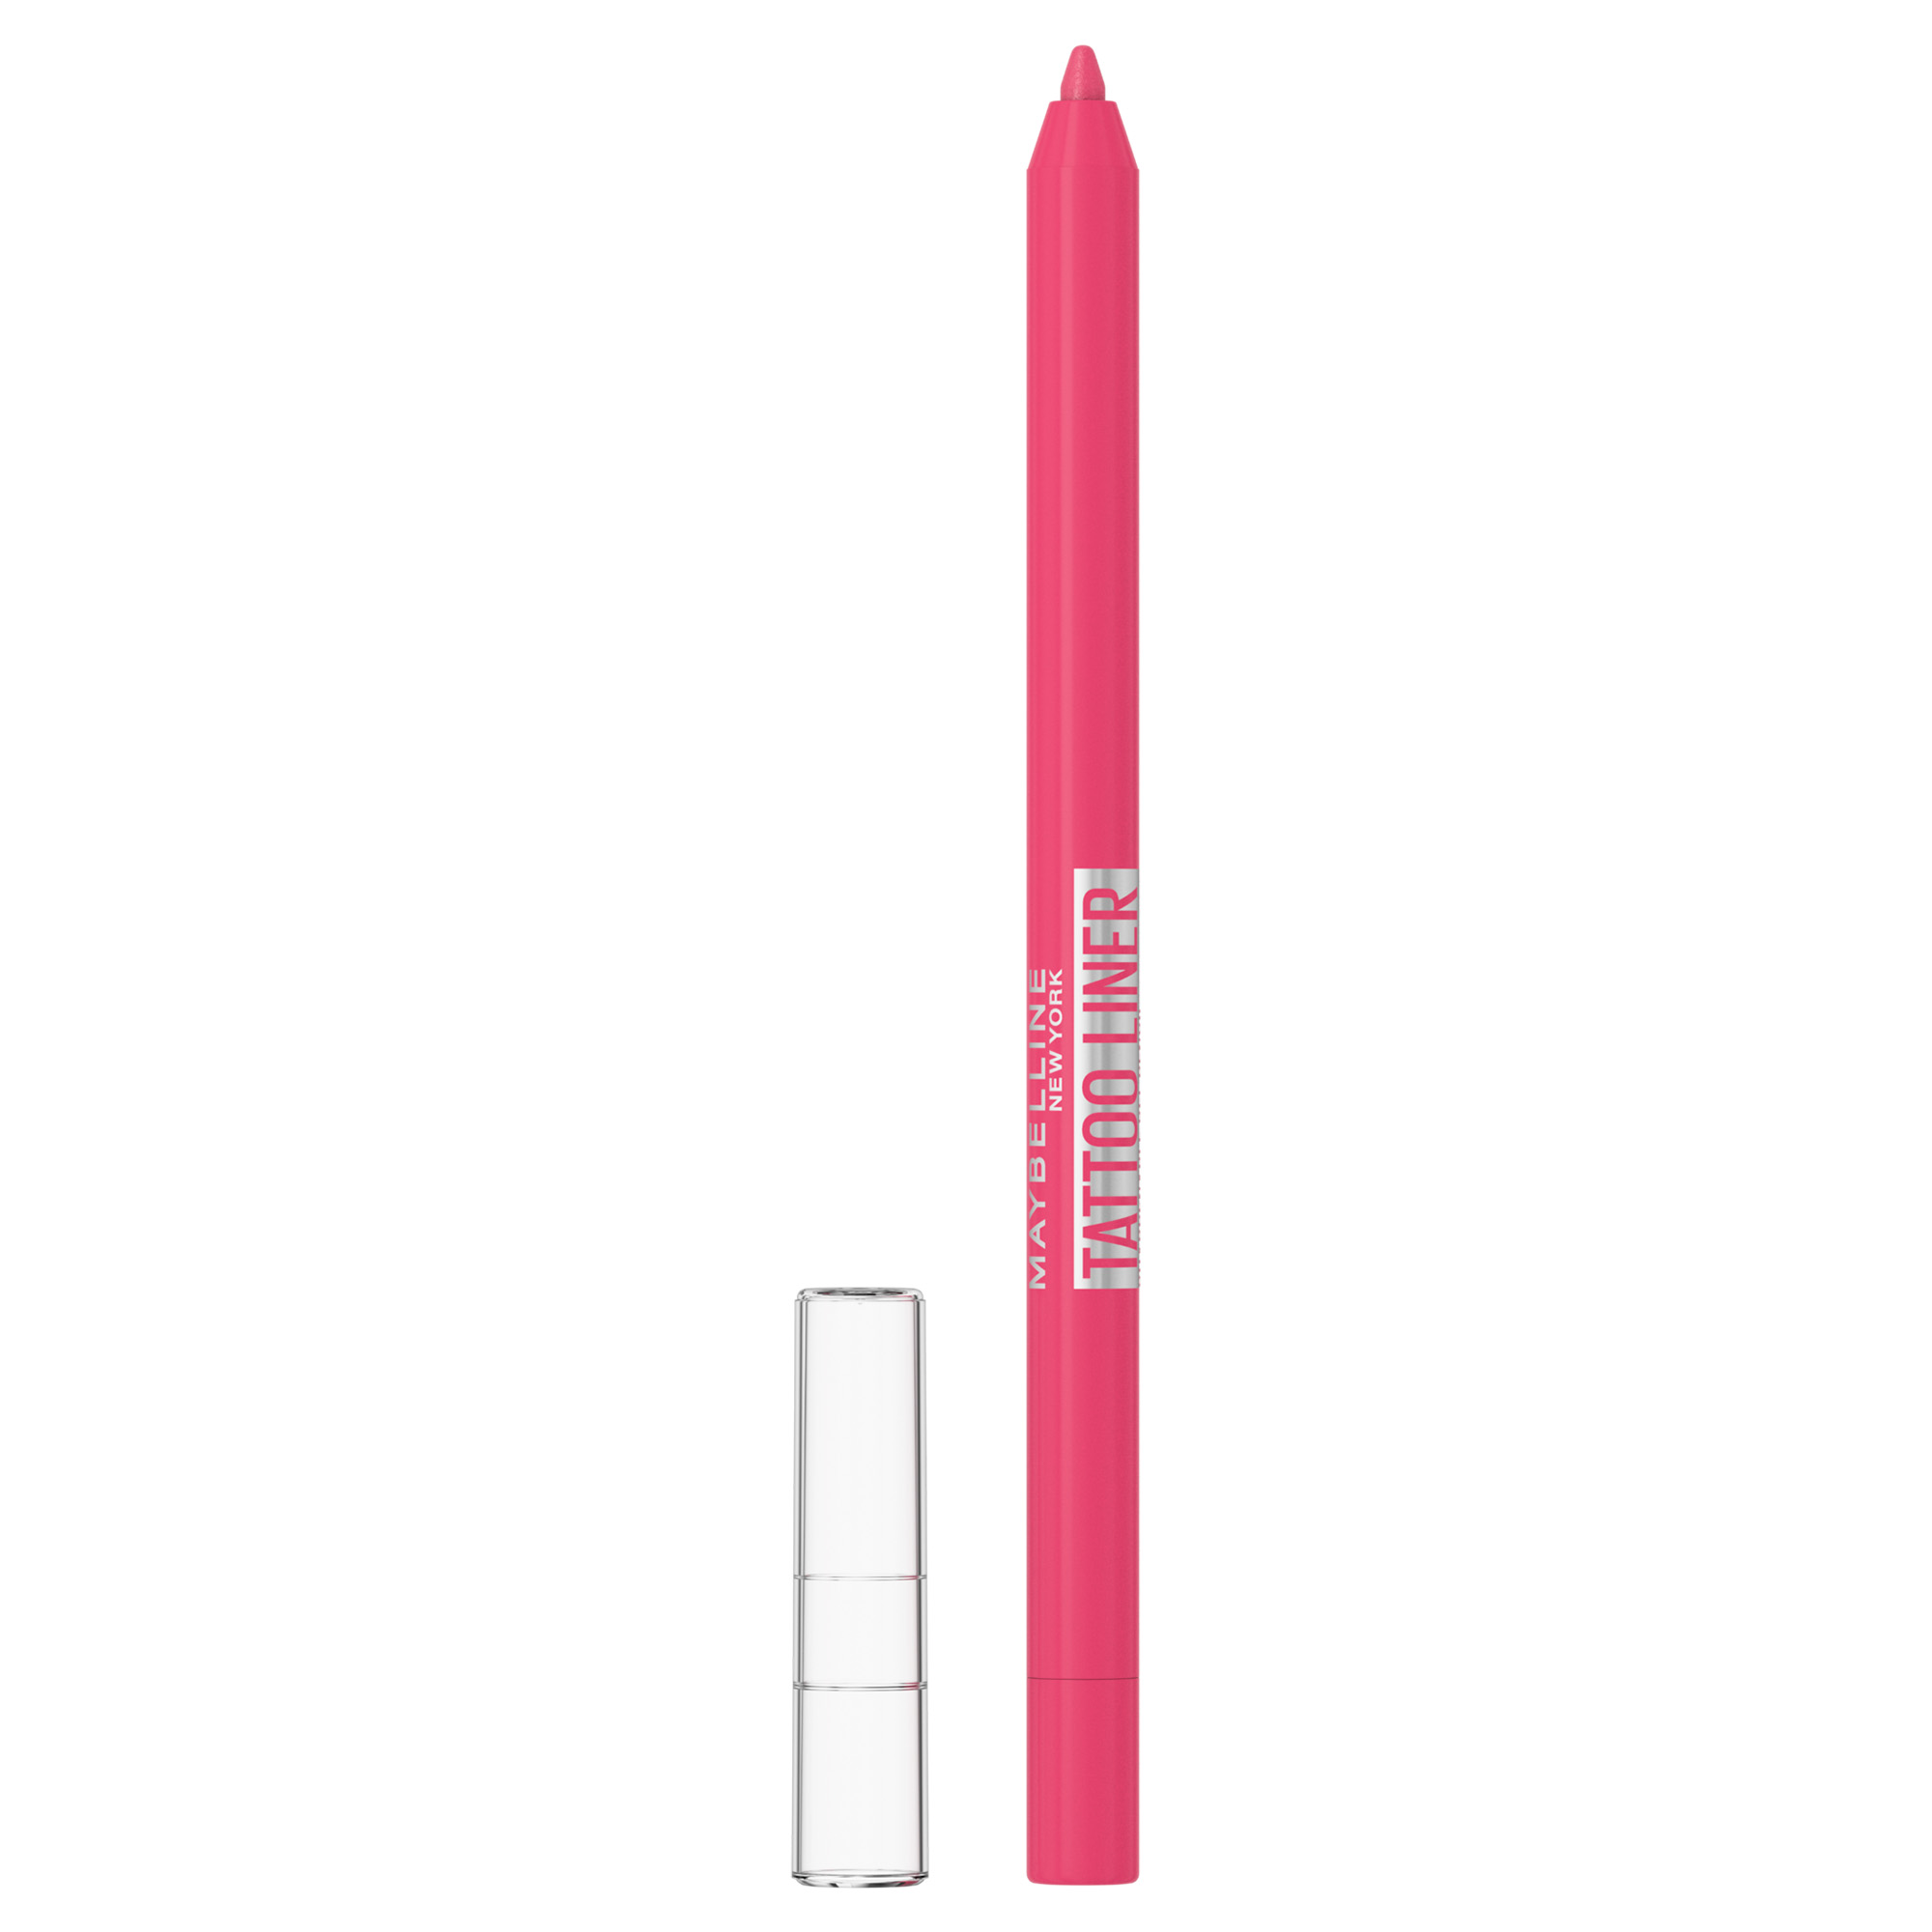 Creion de ochi Tattoo Liner, 802, ultra pink, 1.3 g, Maybelline